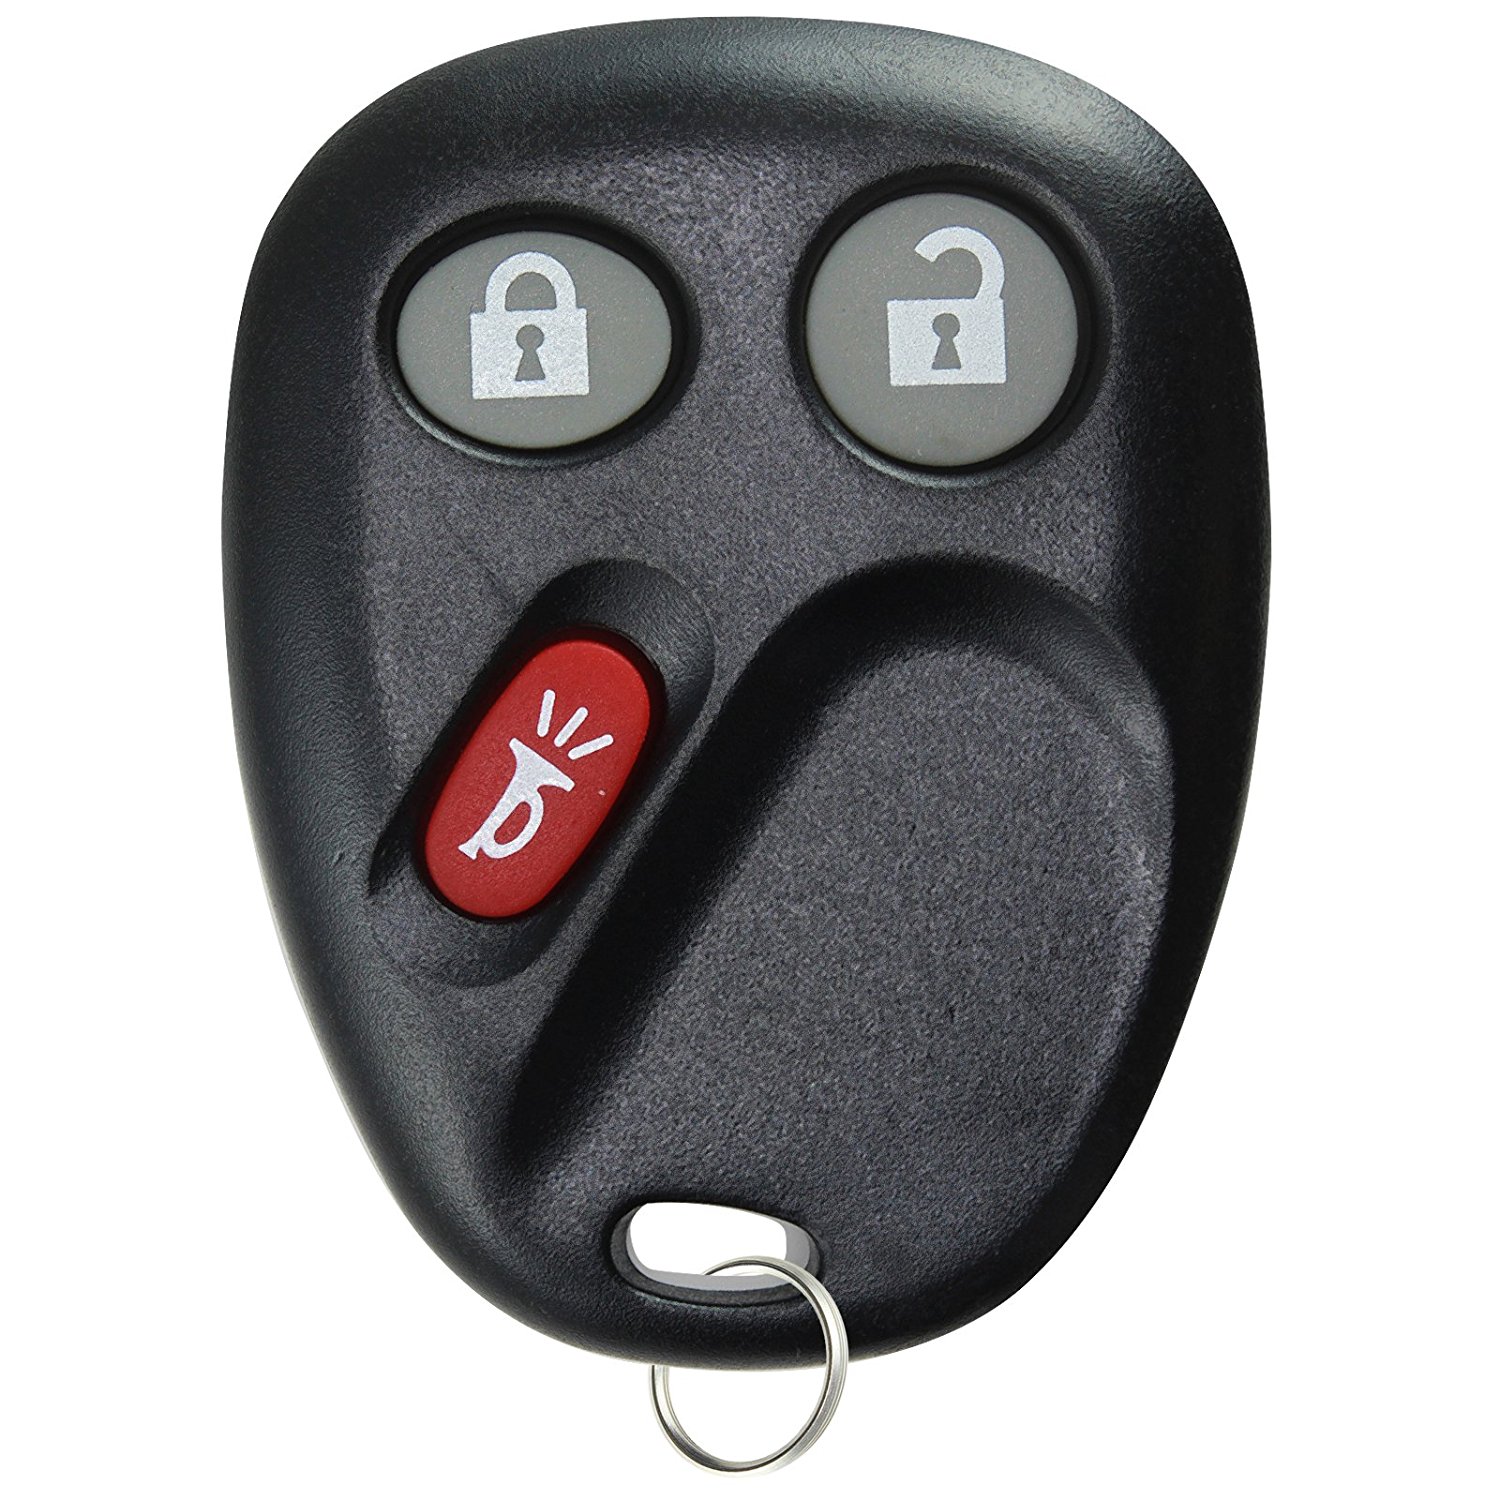 Amazon.com: KeylessOption Keyless Entry Remote Control Car Key Fob ...